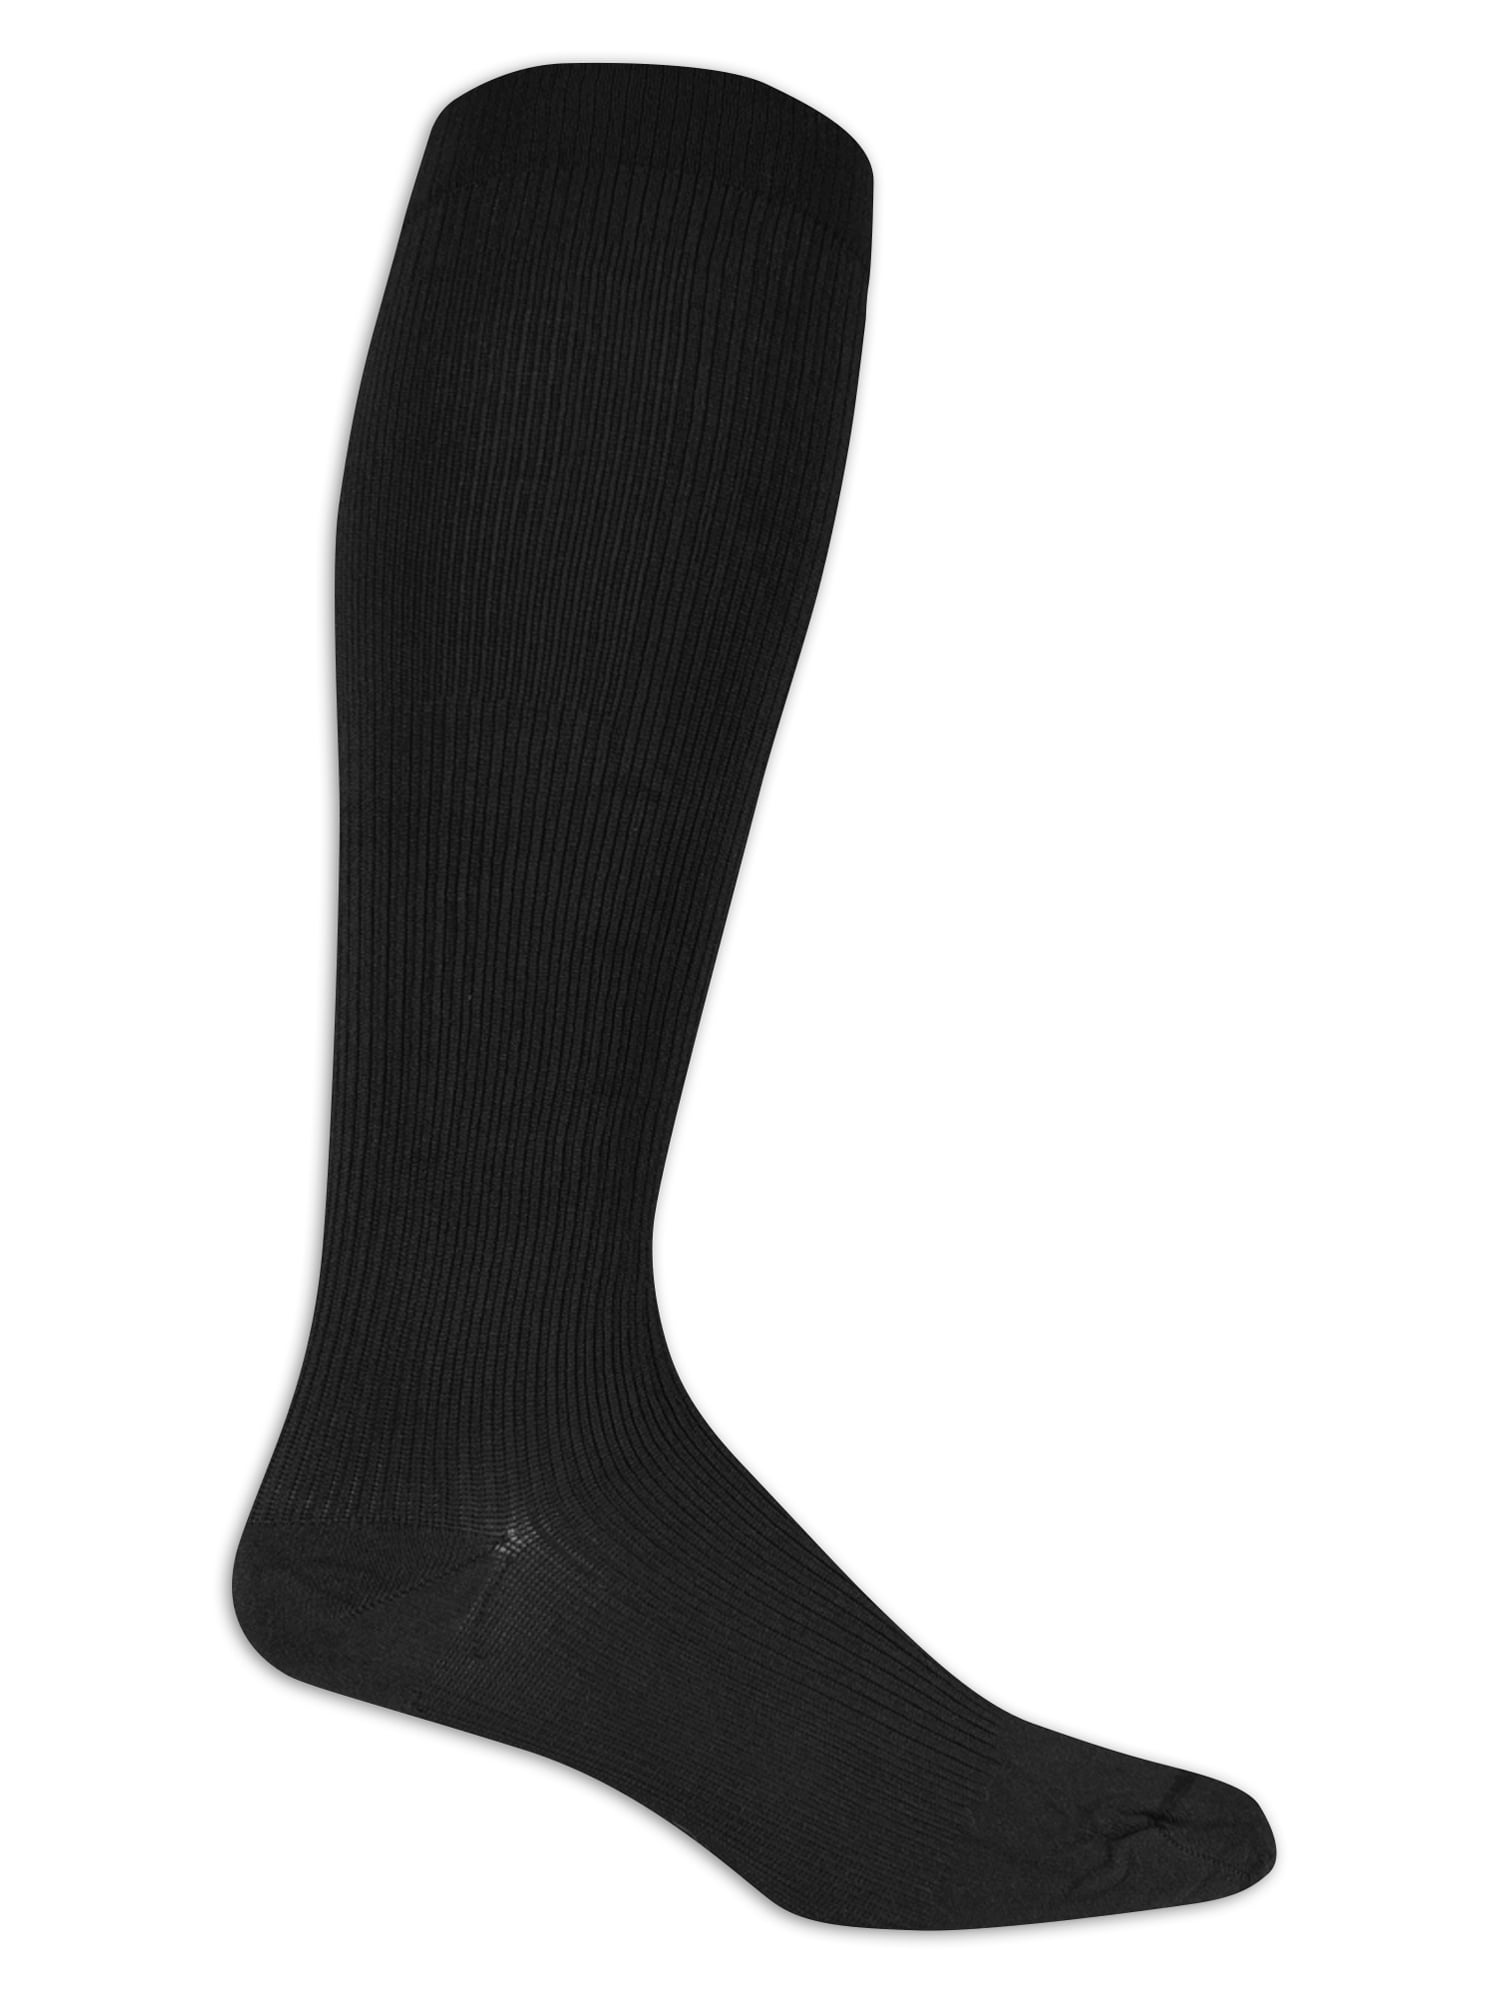 dr scholl's travel compression socks reviews